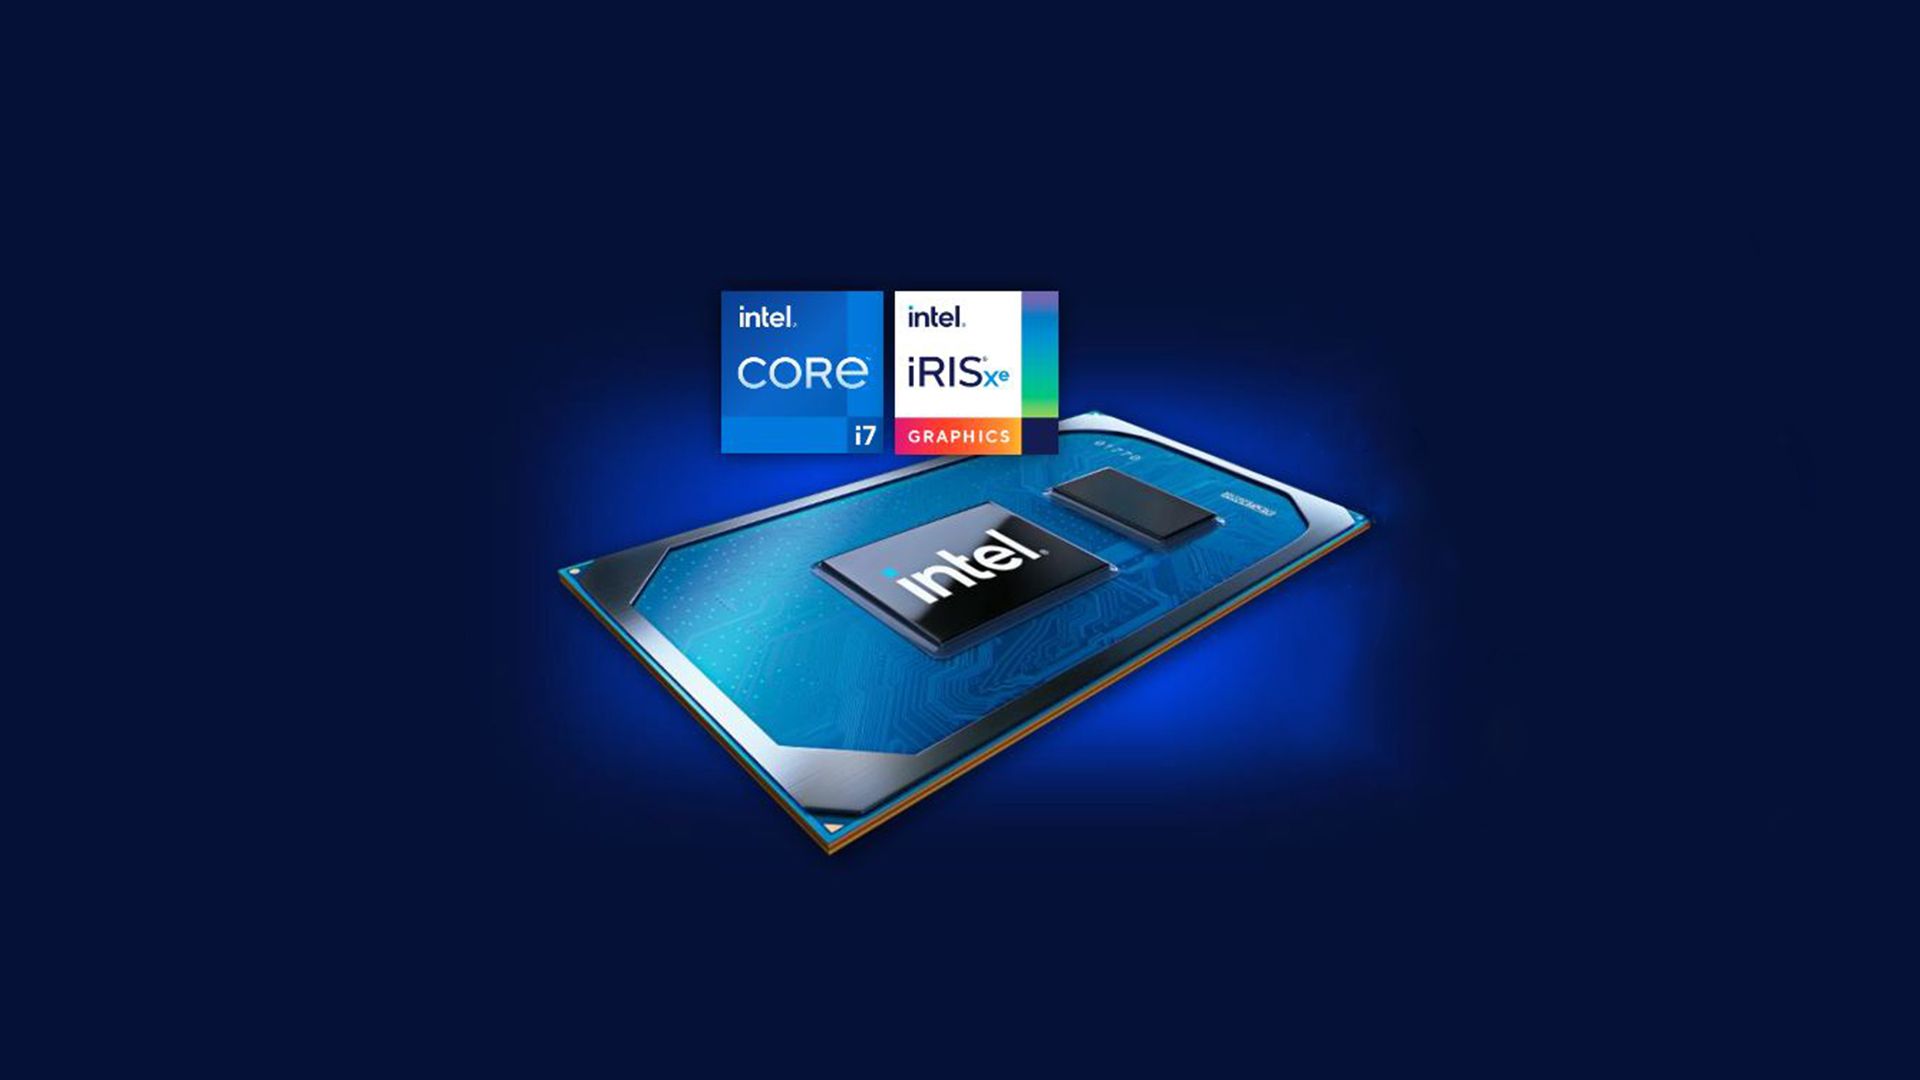 He graphics. Видеокарты Intel Graphics xe. Интел Ирис Хе Графикс. Core i5 Intel Iris. Графический процессор Intel Iris xe Graphics.